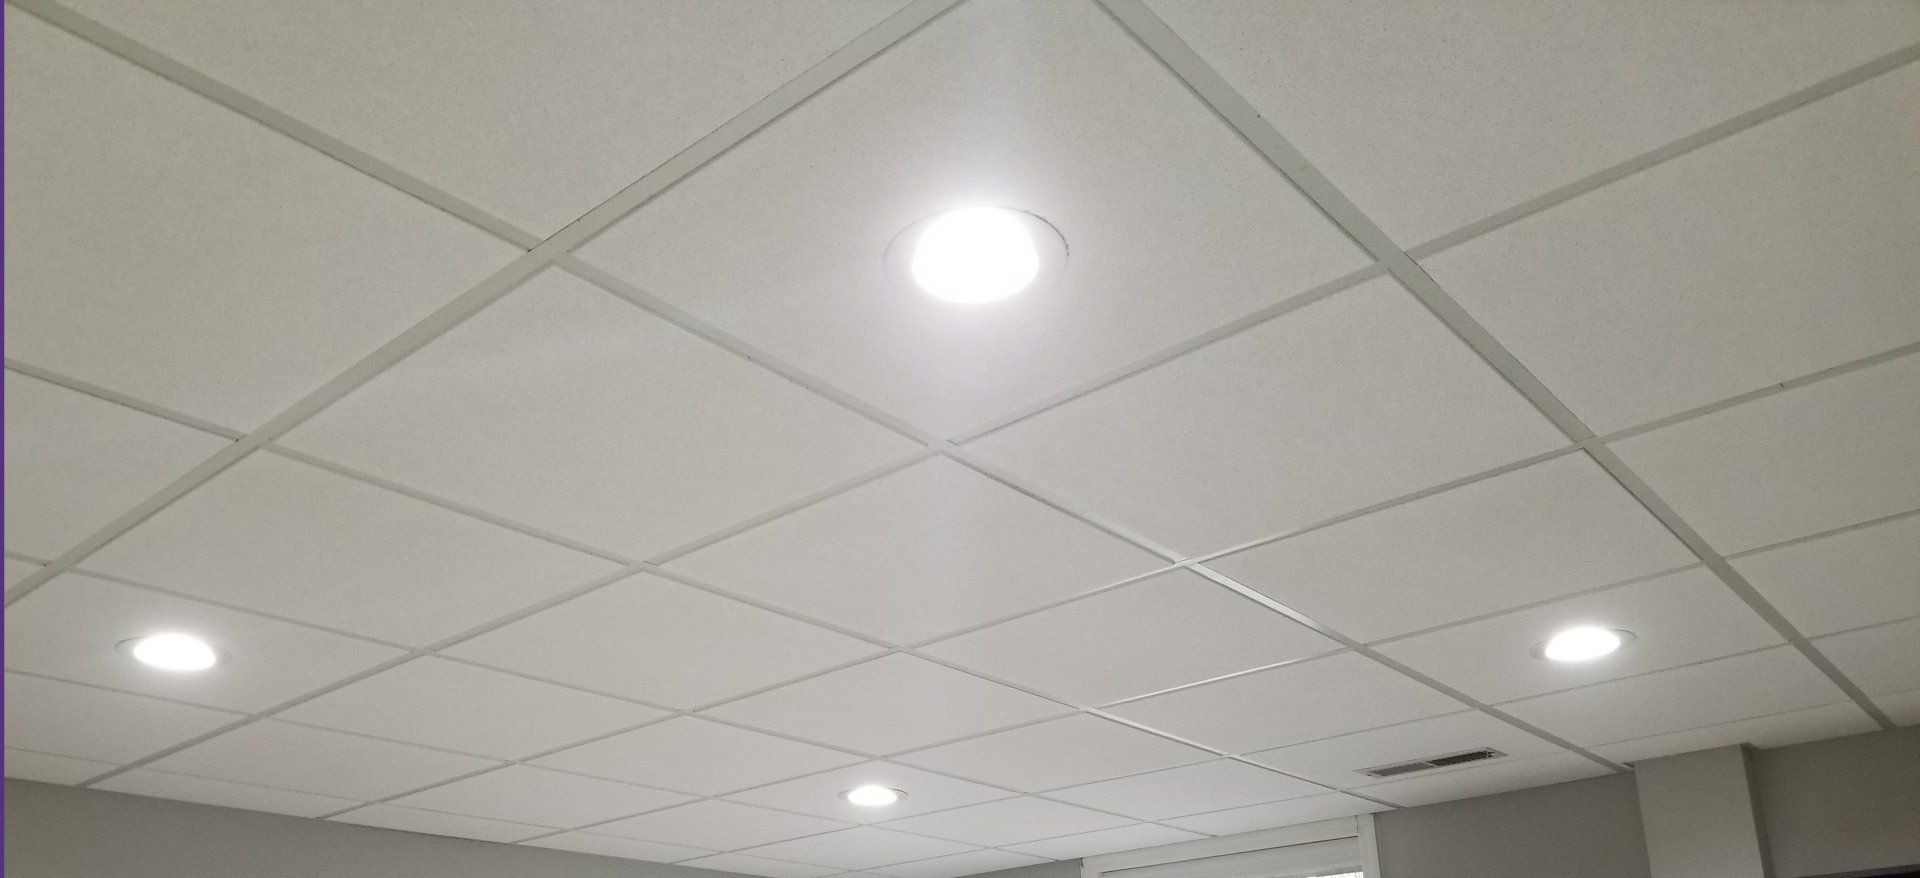 lighting in ceiling birmingham ala